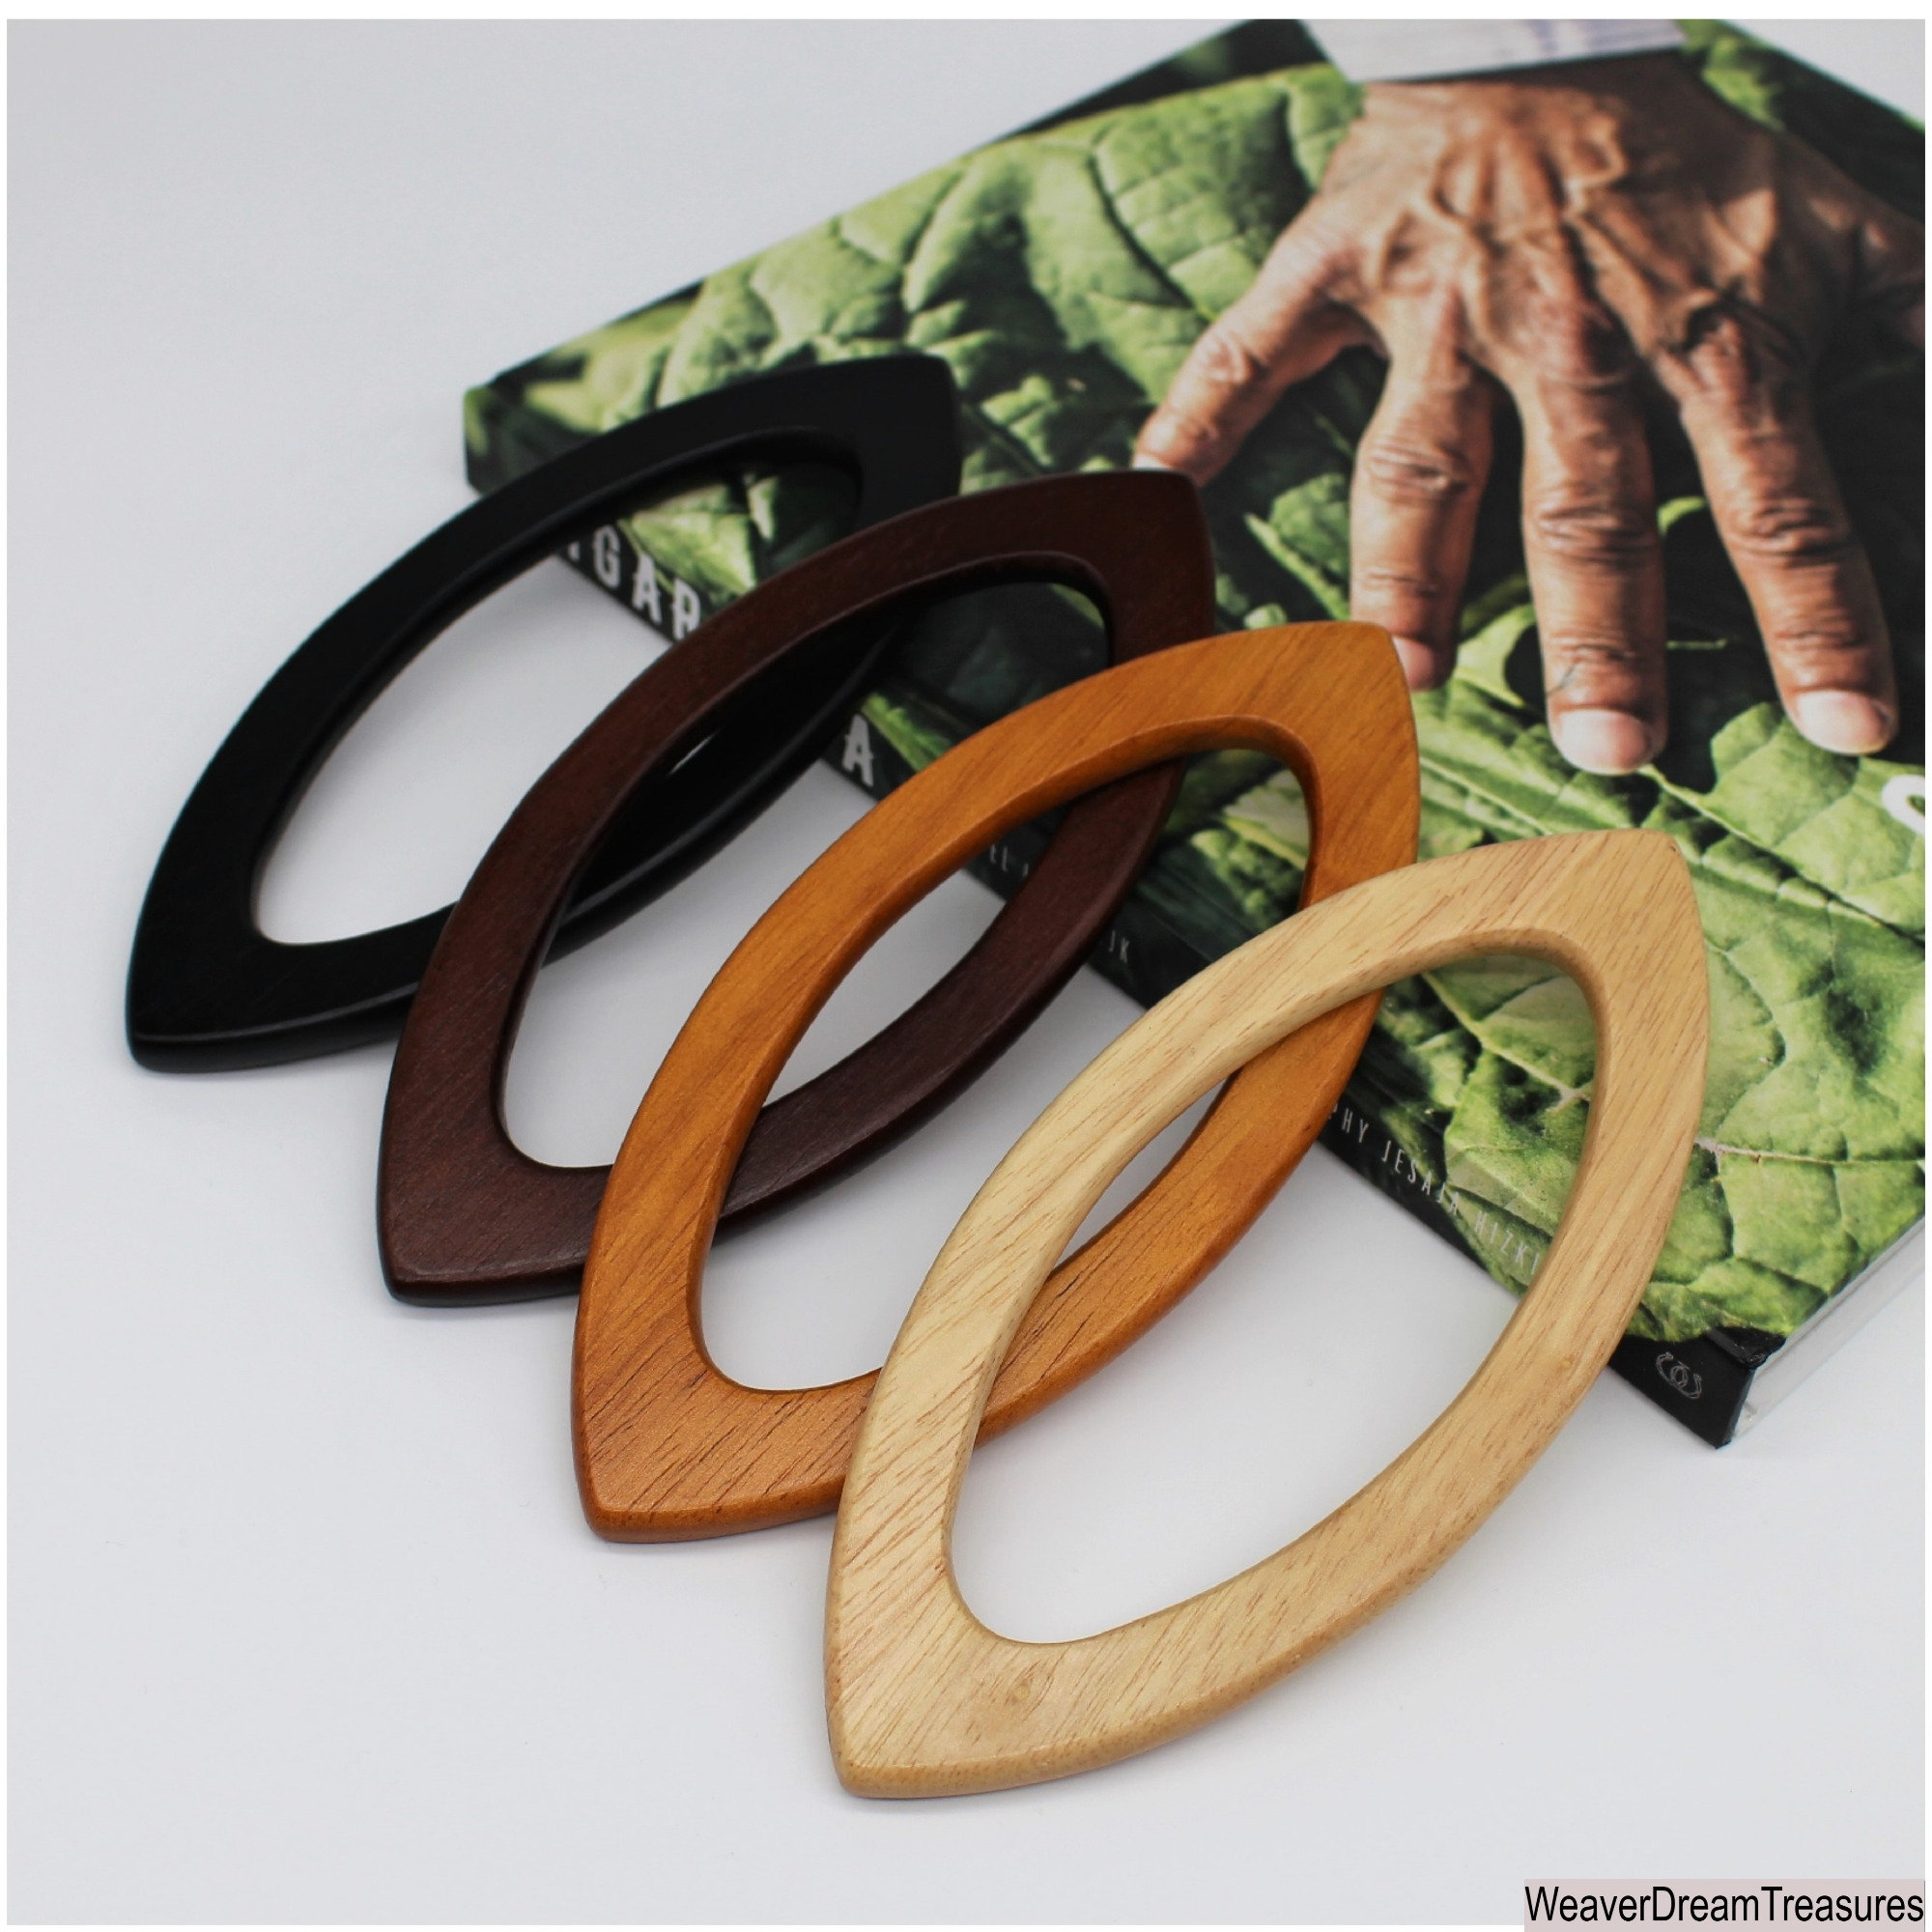 Black, 11 1/2 inch/30cm Wooden Purse Handles, Purse Handles Handbag Handle  for Bag Making, Purse Making, Handle Replacement, a Pair (2 Pieces) per